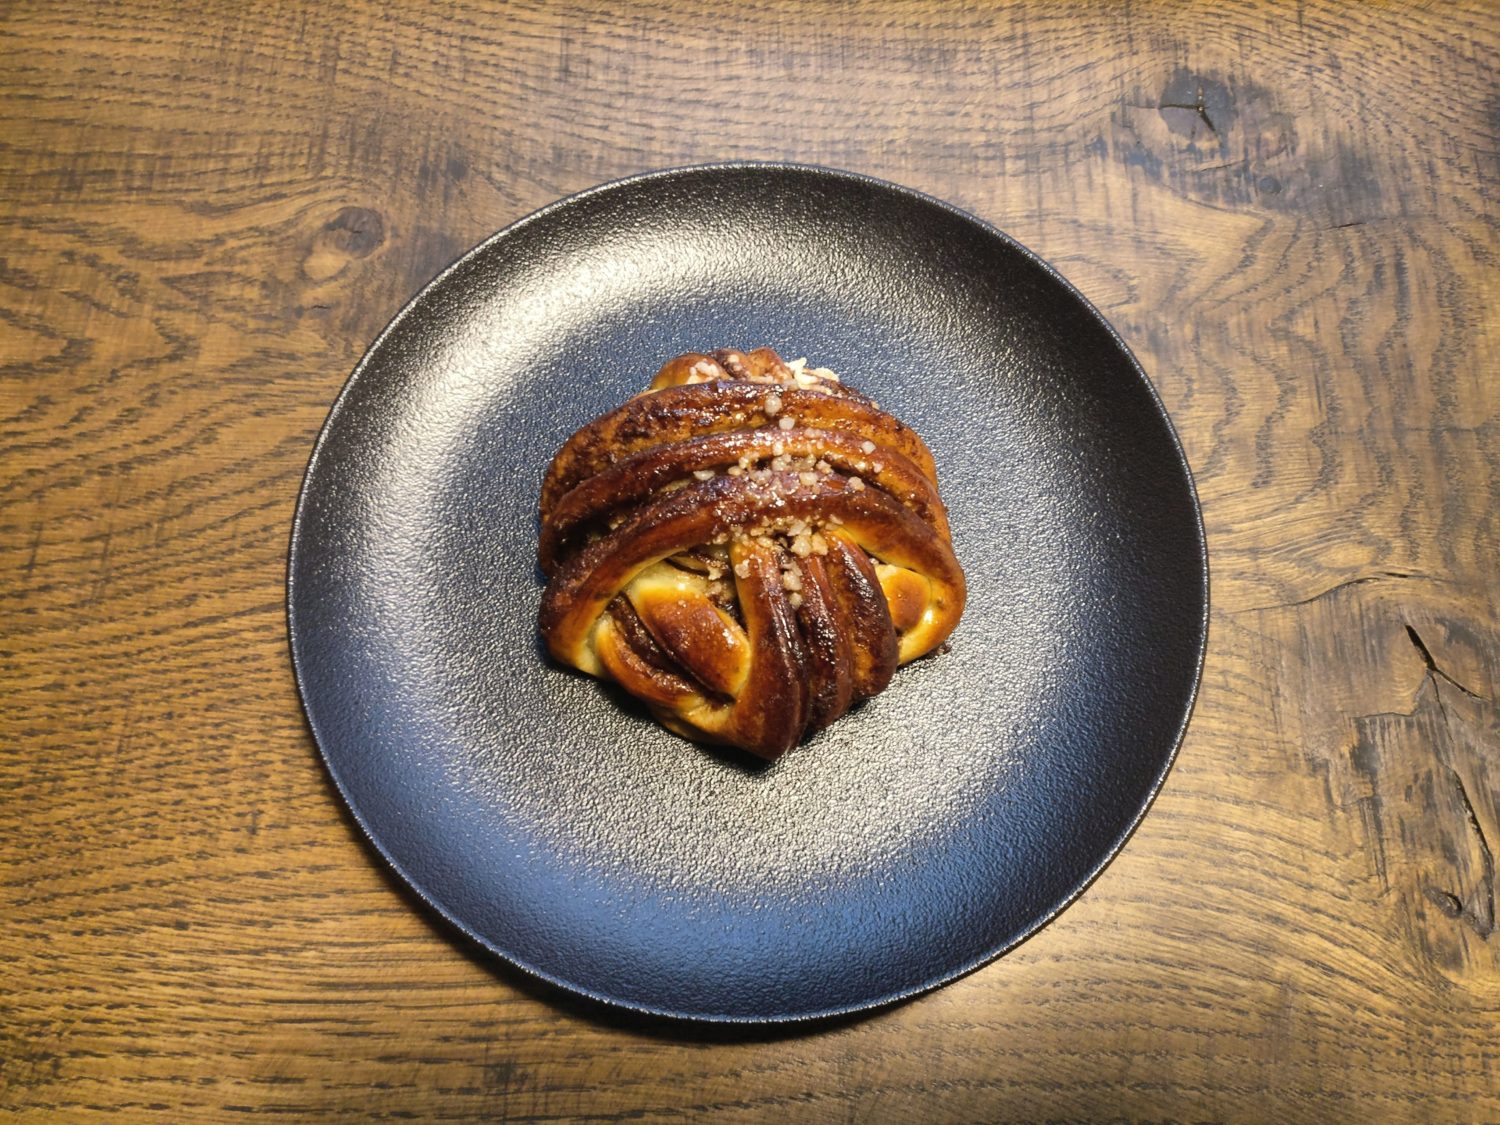 Cinnamon bun on a black plate